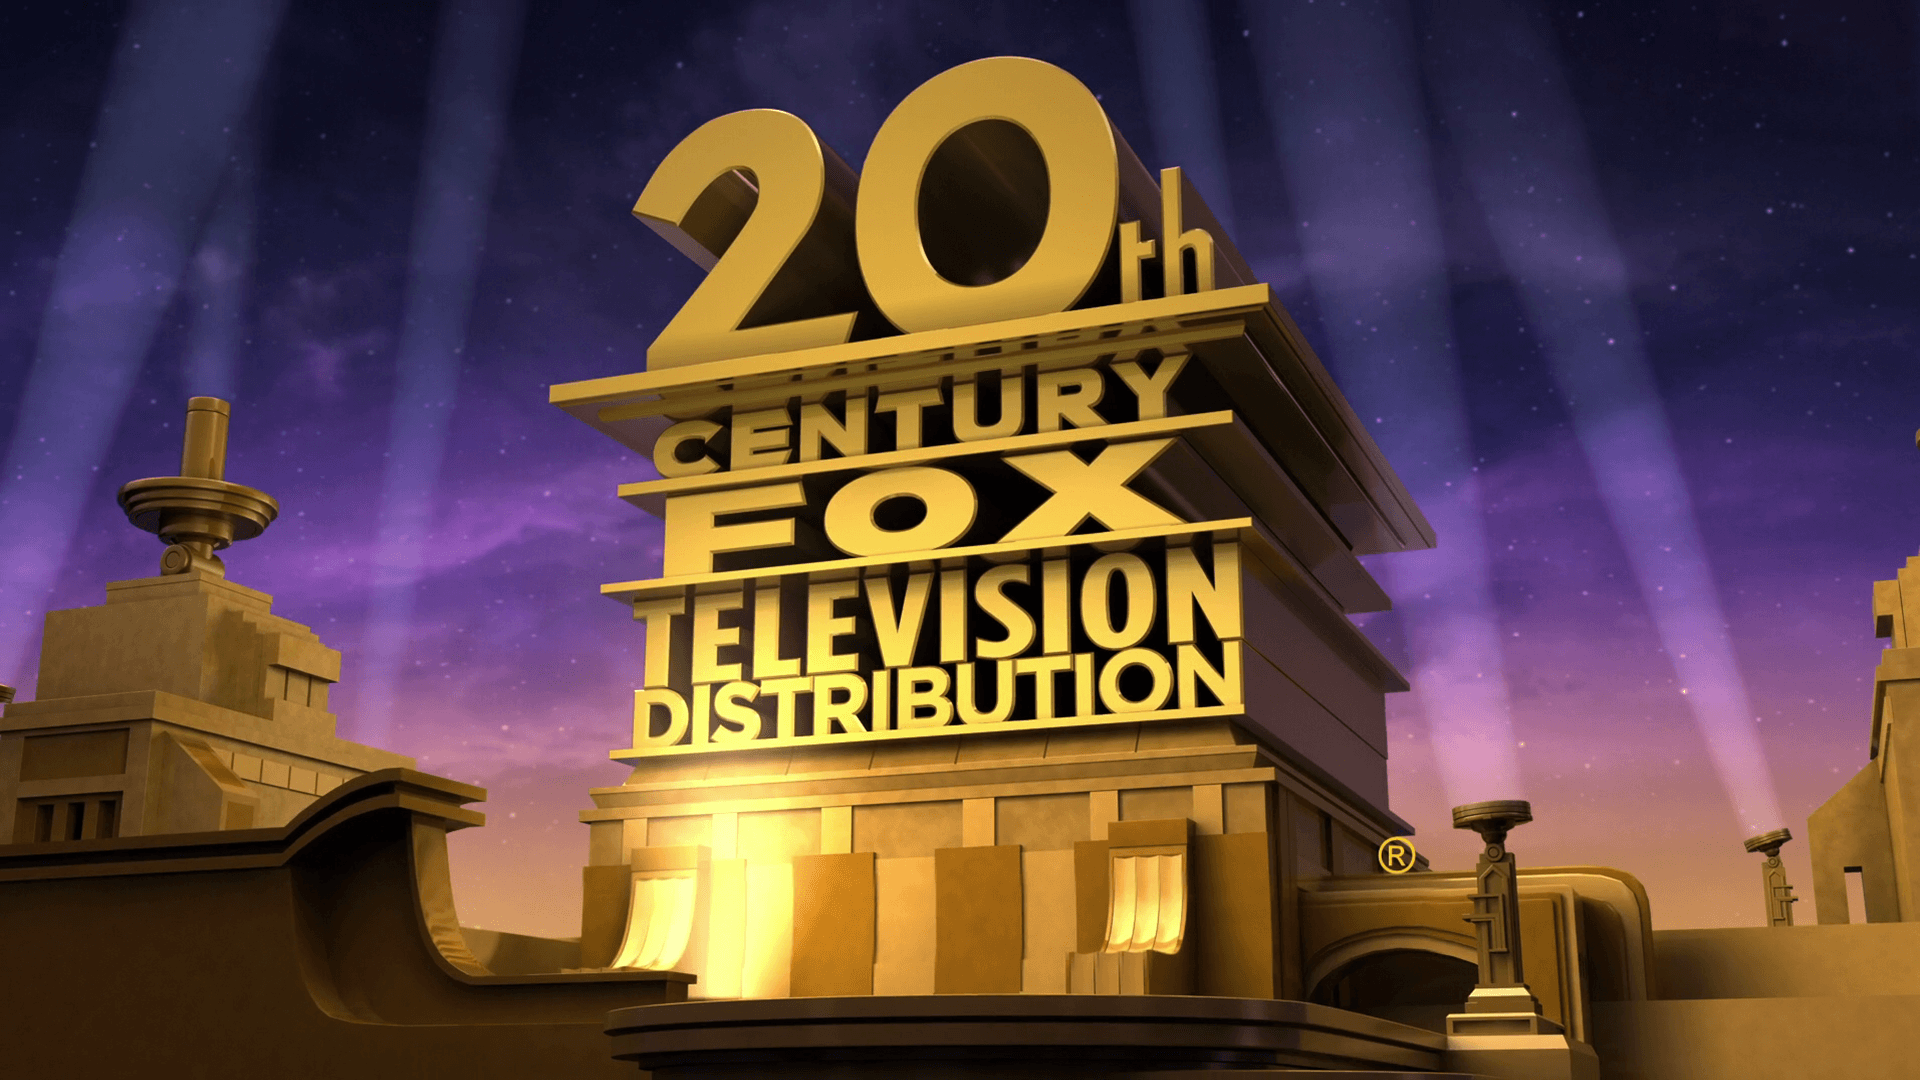 20th Century Fox Television Logo - Image - 20th Century Fox Television Distribution 2013.png ...